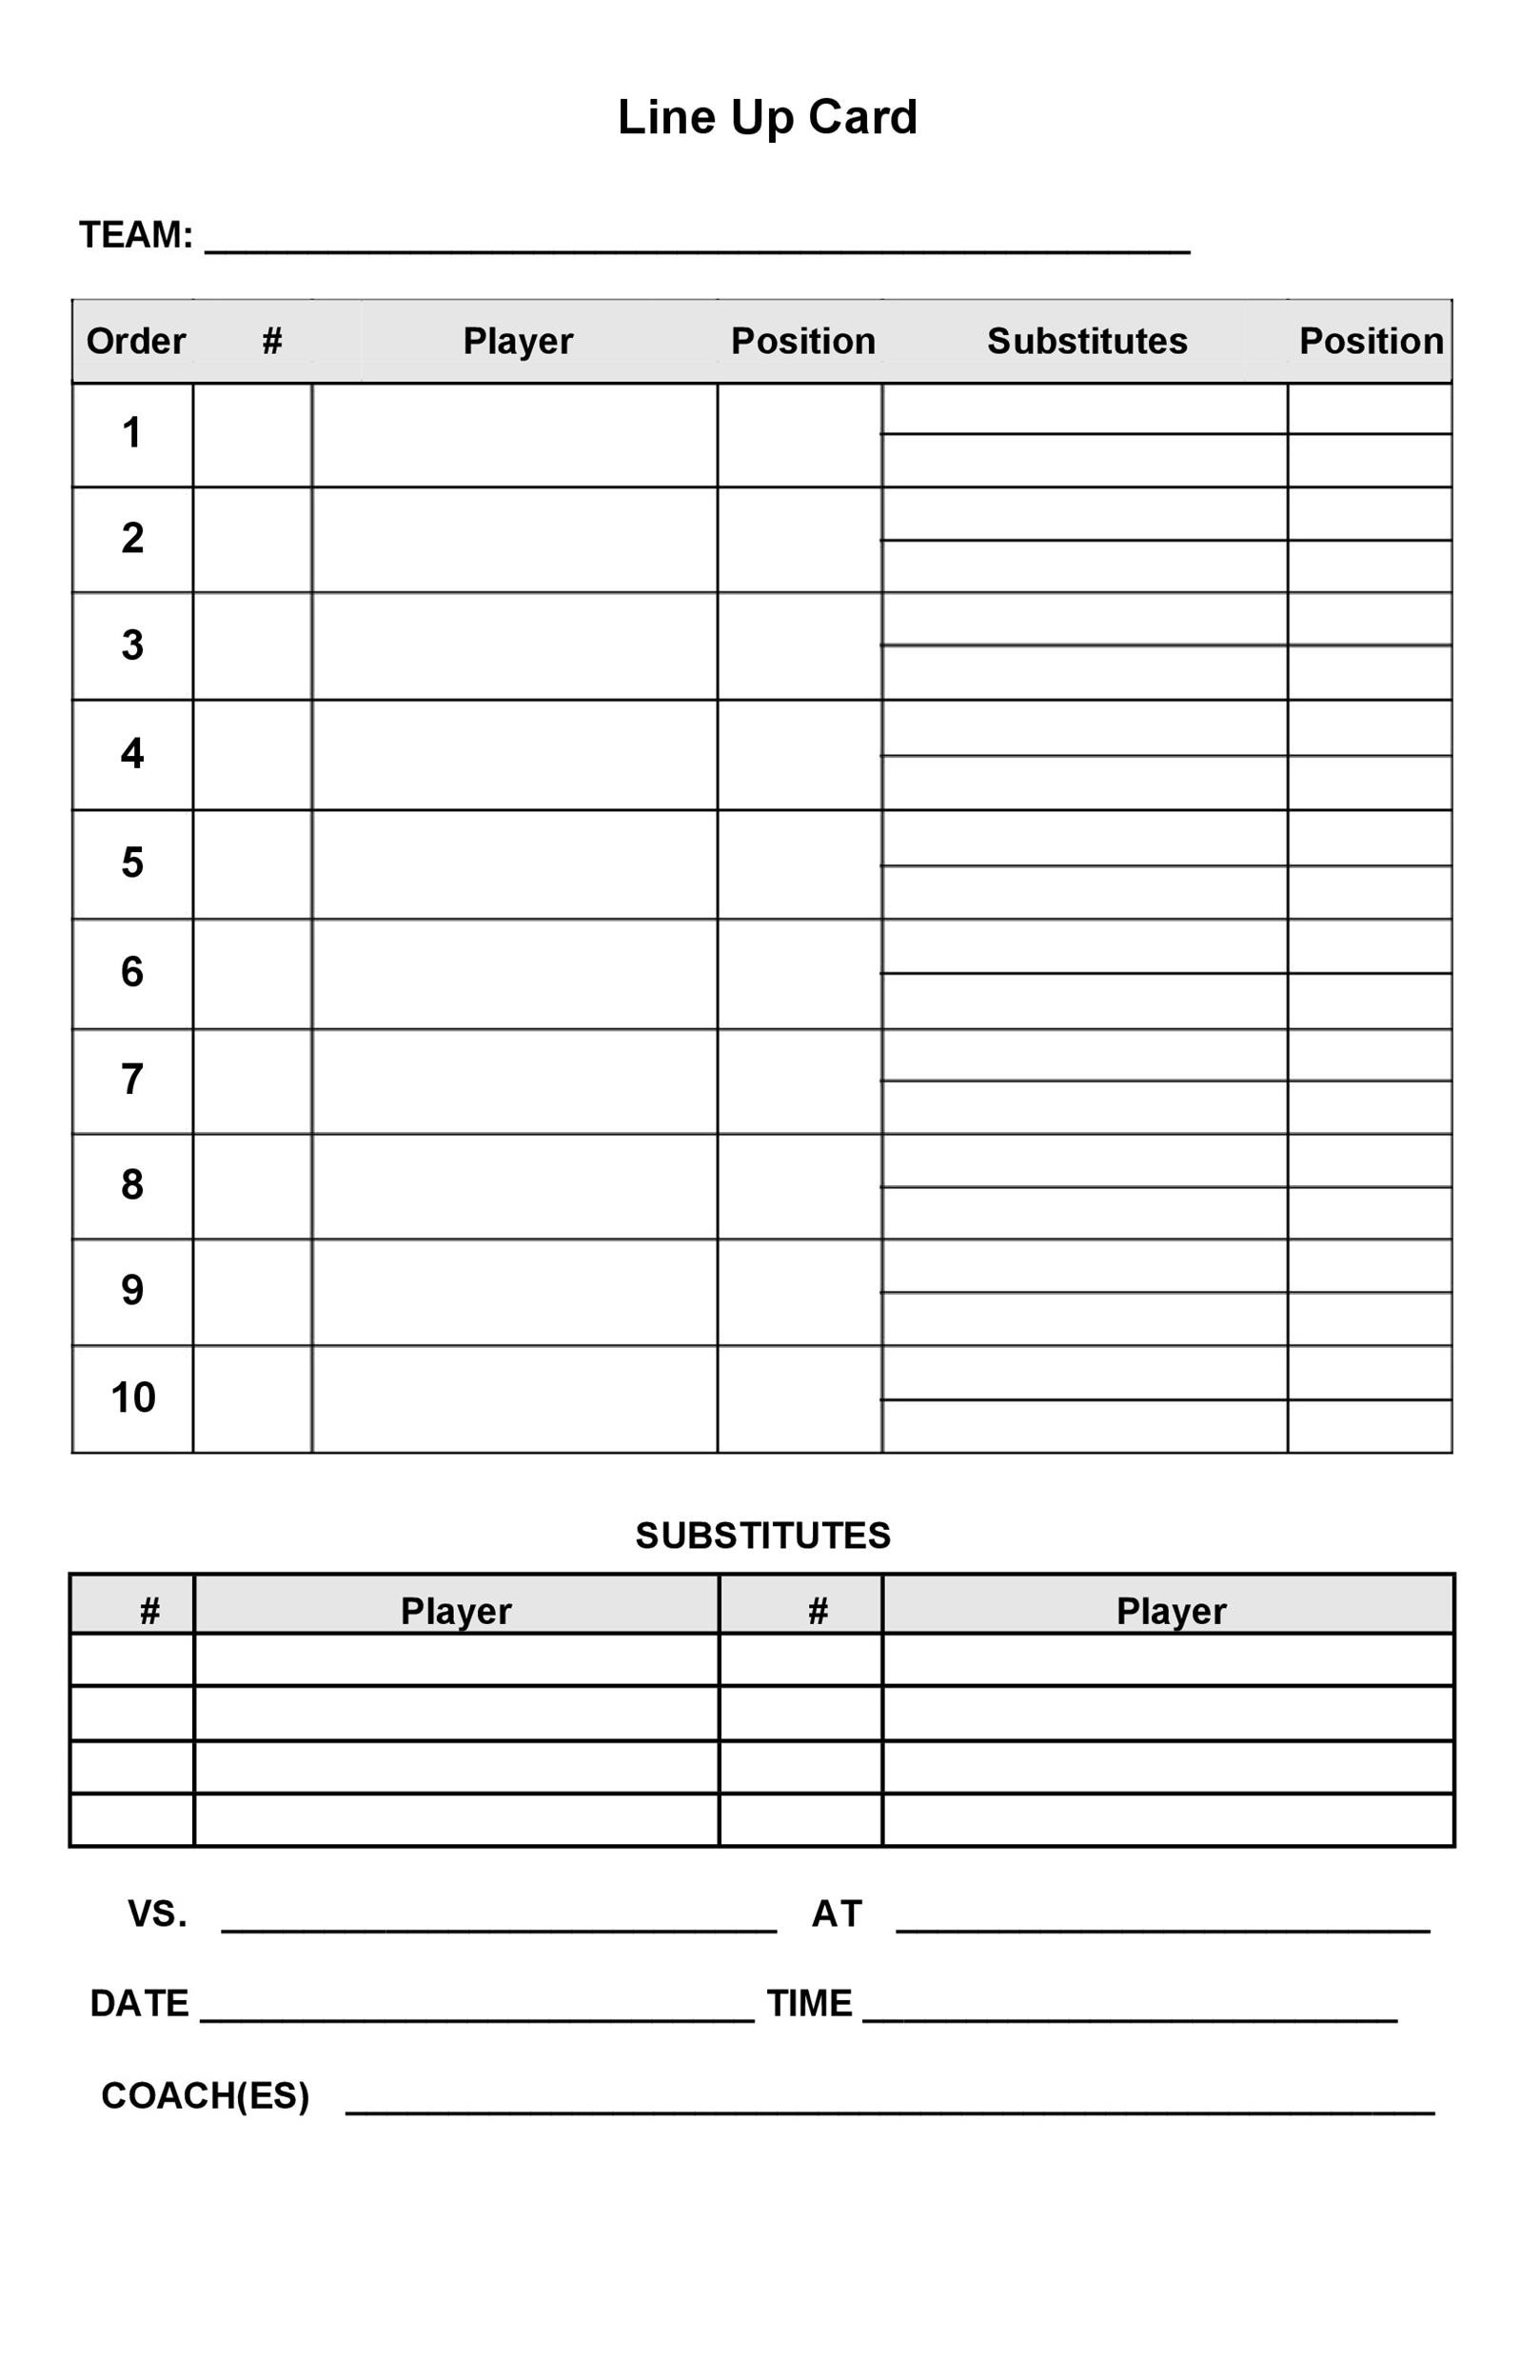 Download Baseball Lineup Cards Images Regarding Baseball Lineup Card Template